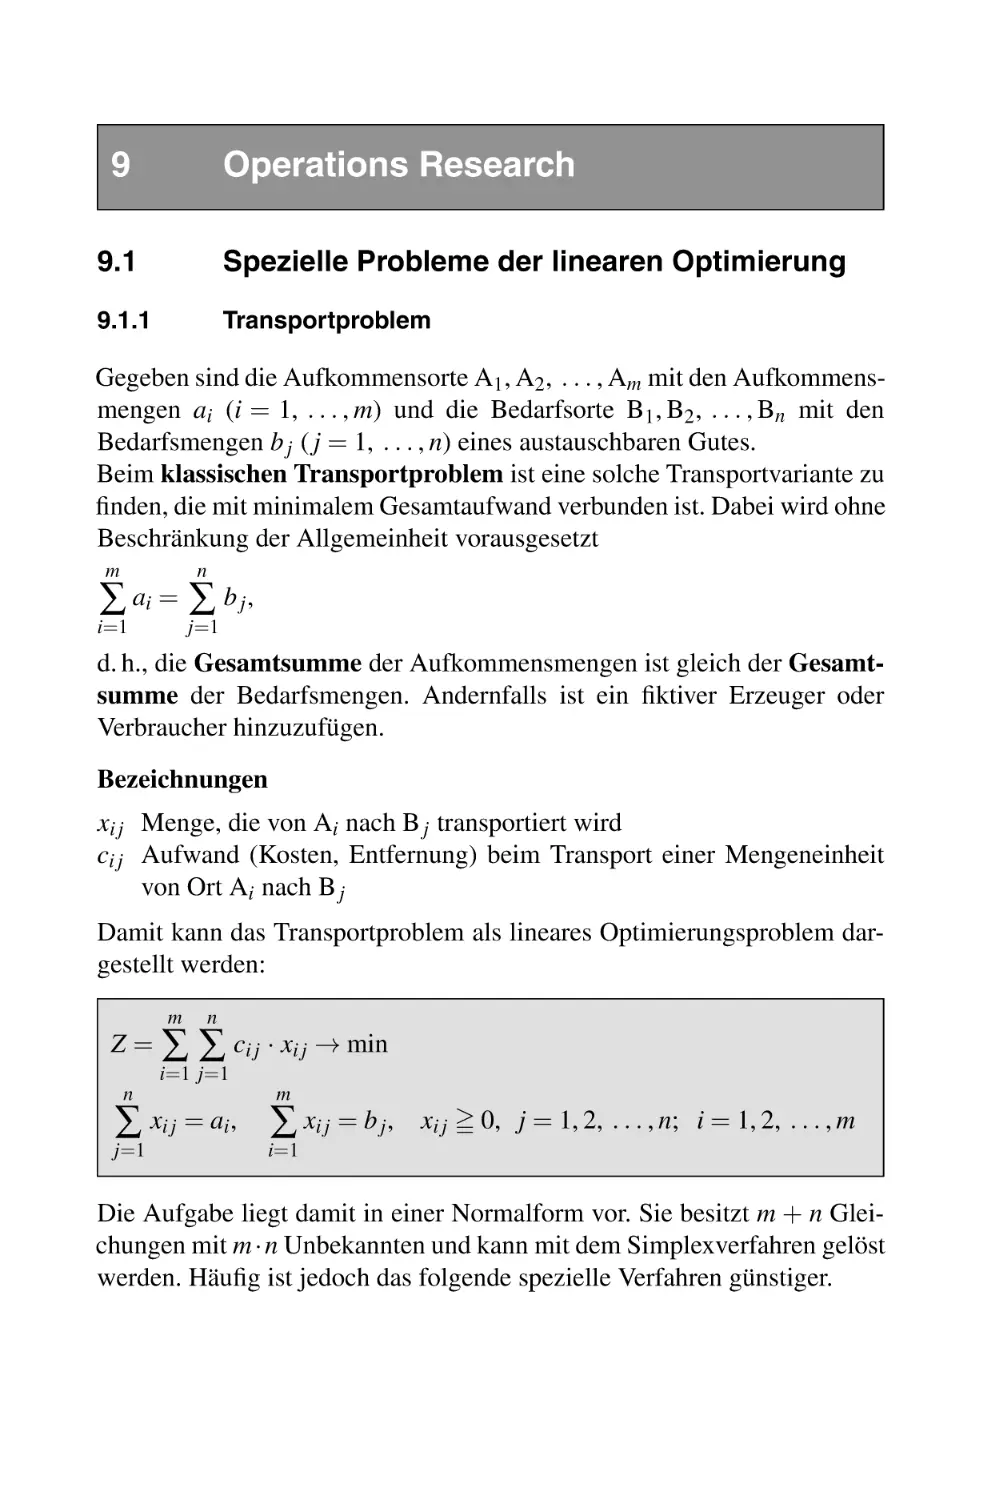 009
9 Operations Research
9.1 Spezielle Probleme der linearen Optimierung
9.1.1 Transportproblem